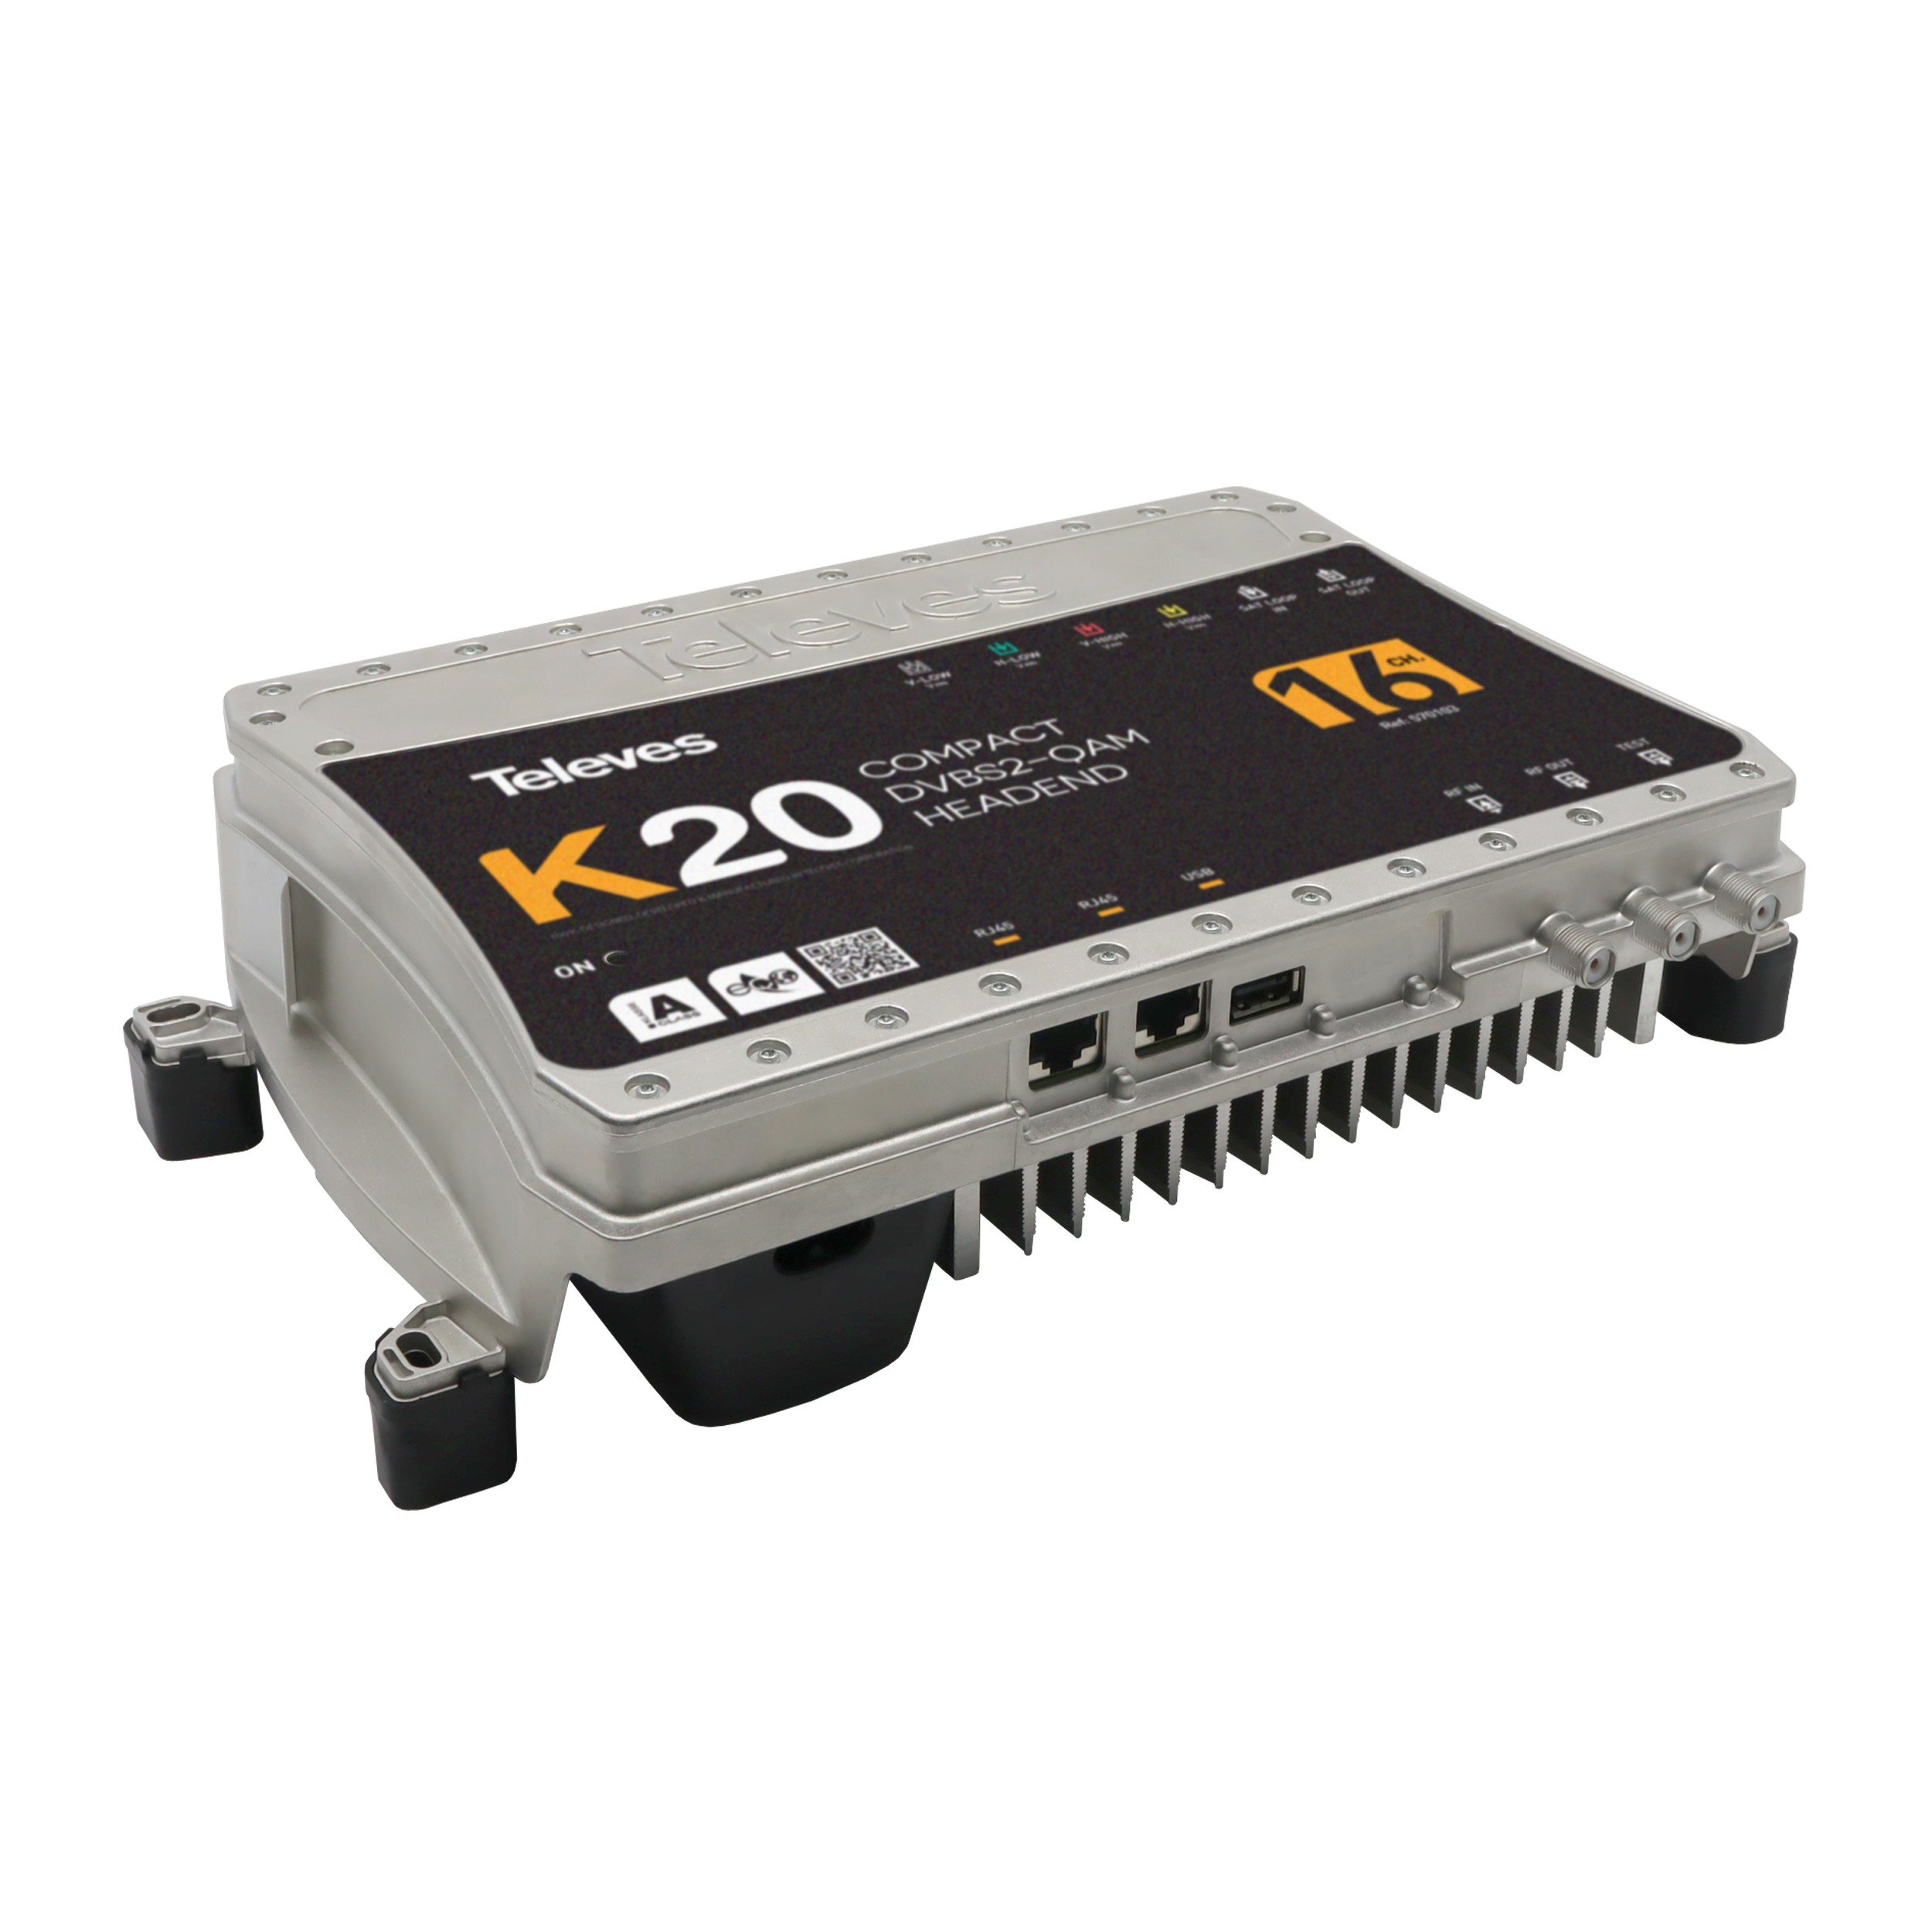 K20 - Kompaktkopfstelle 16 Transponder DVB-S2 in QAM